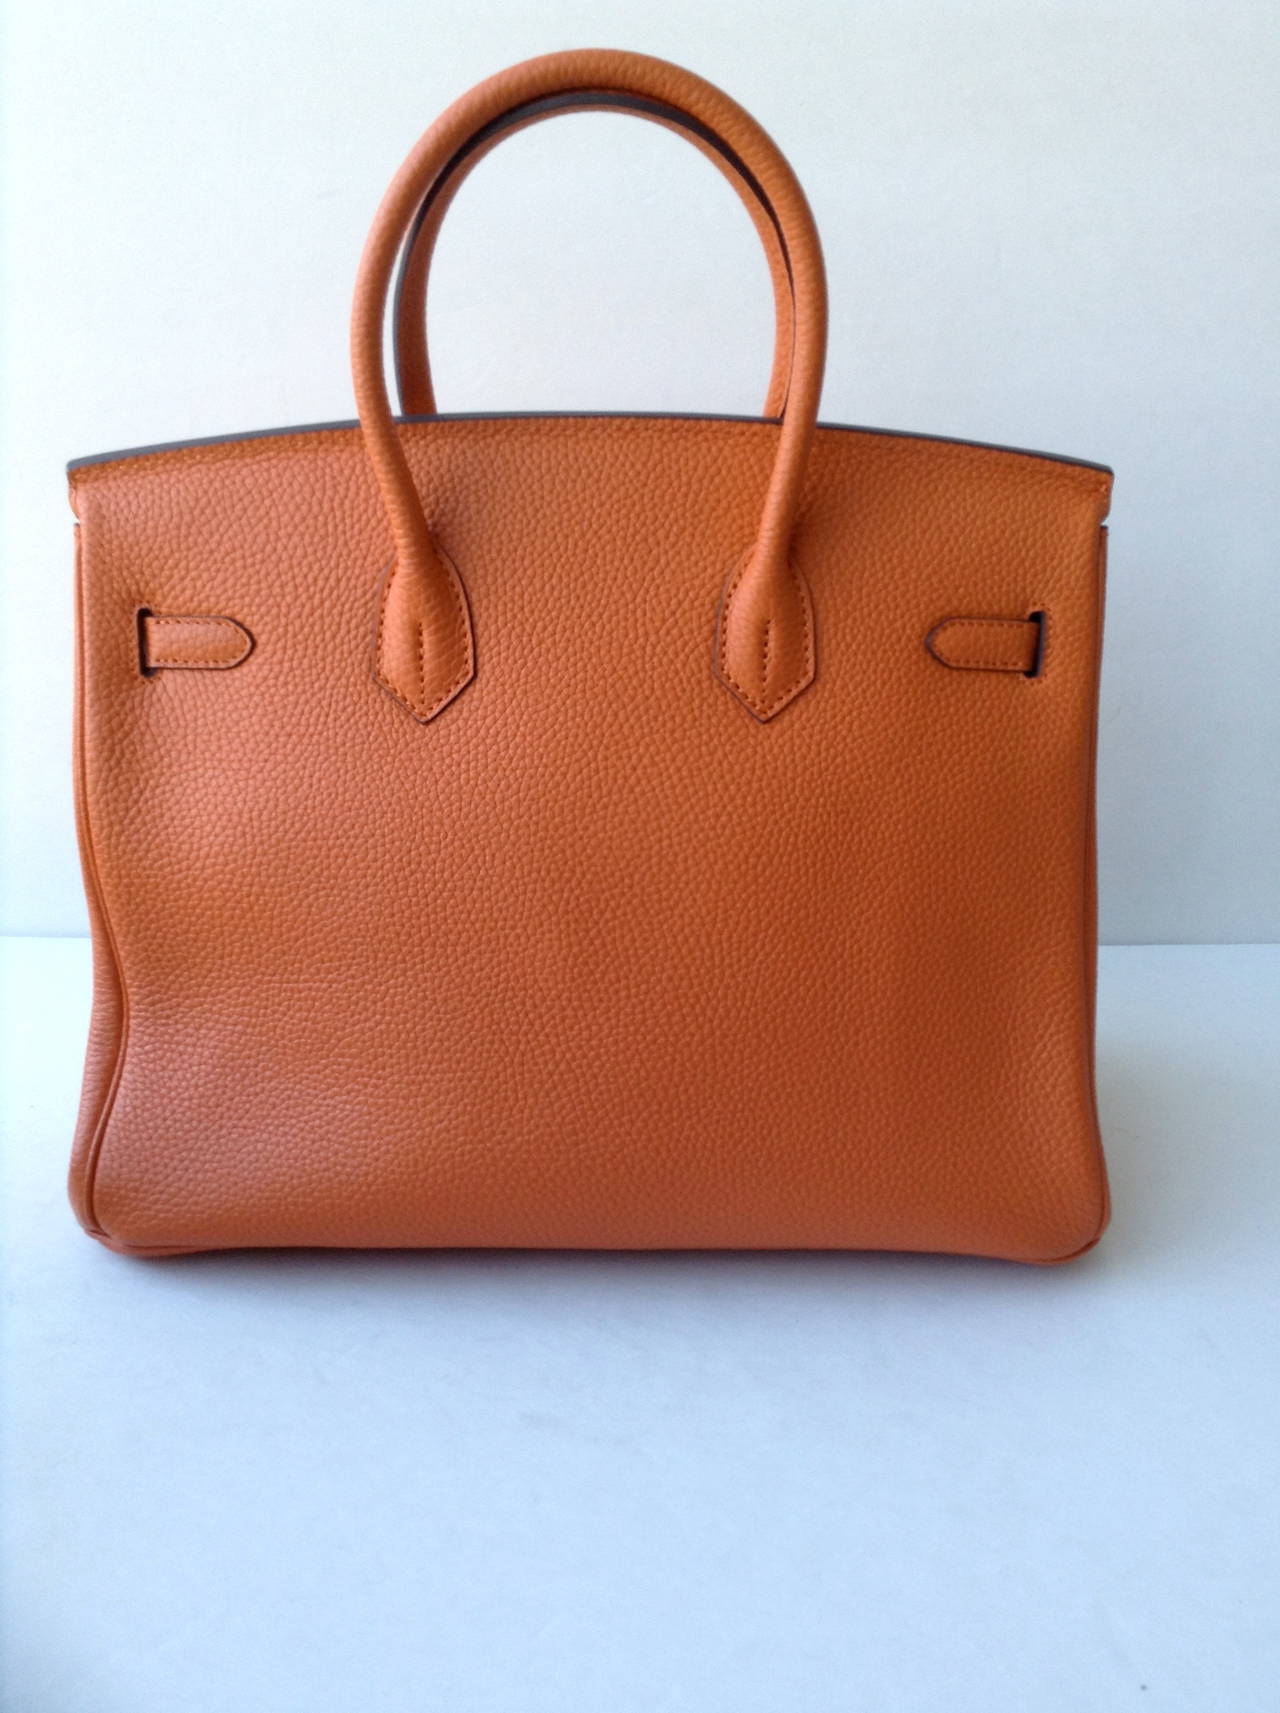 Hermes Birkin Orange 30 Togo Handbag For Sale 2